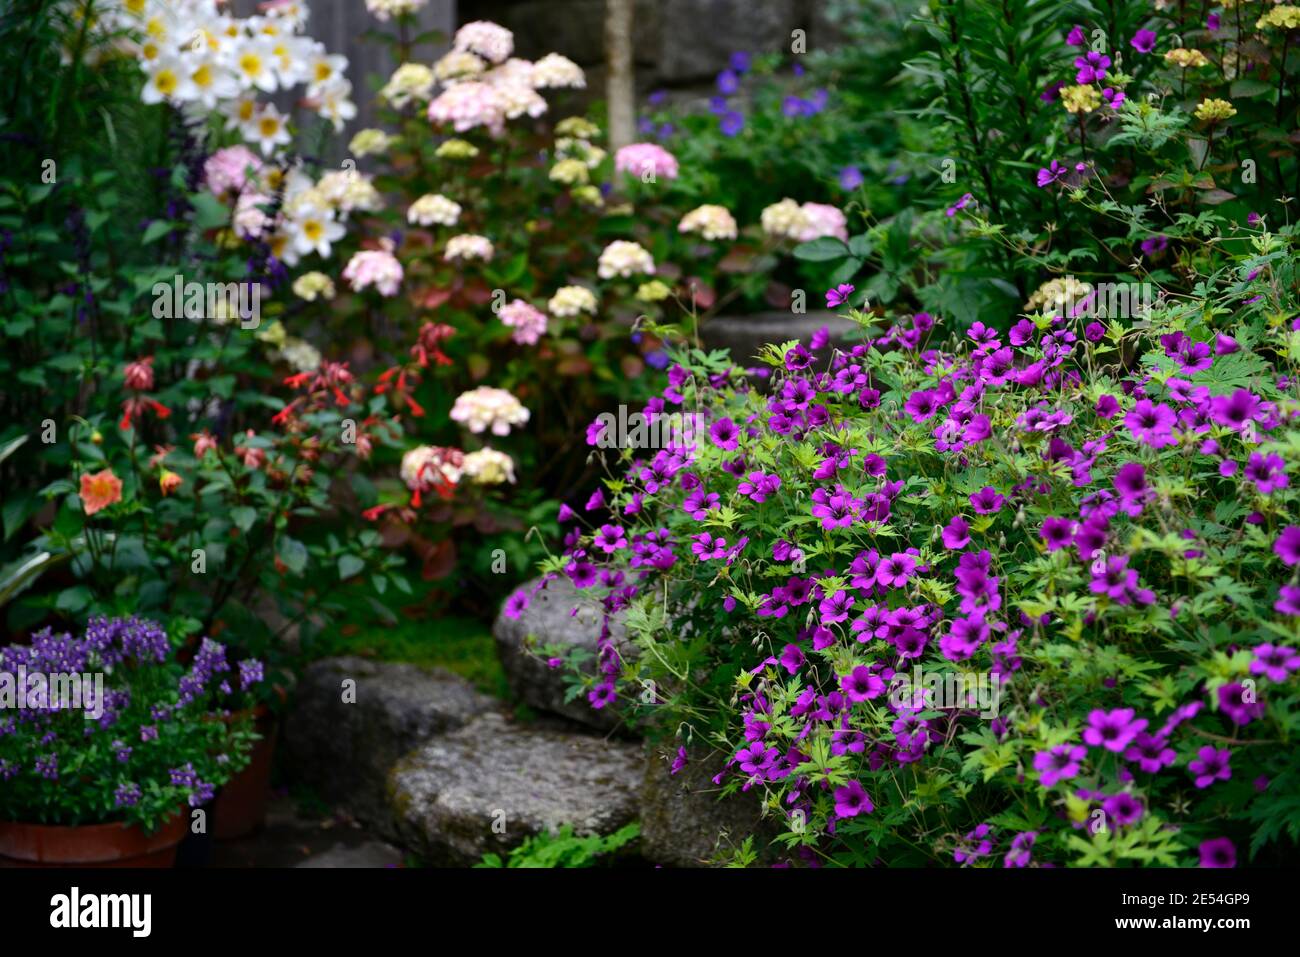 geranium anne thomson,Hydrangea preziosa,lilium regale,lily regale,hydrangeas and lilies,pink white flowers,flowering combination,mixed planting combi Stock Photo